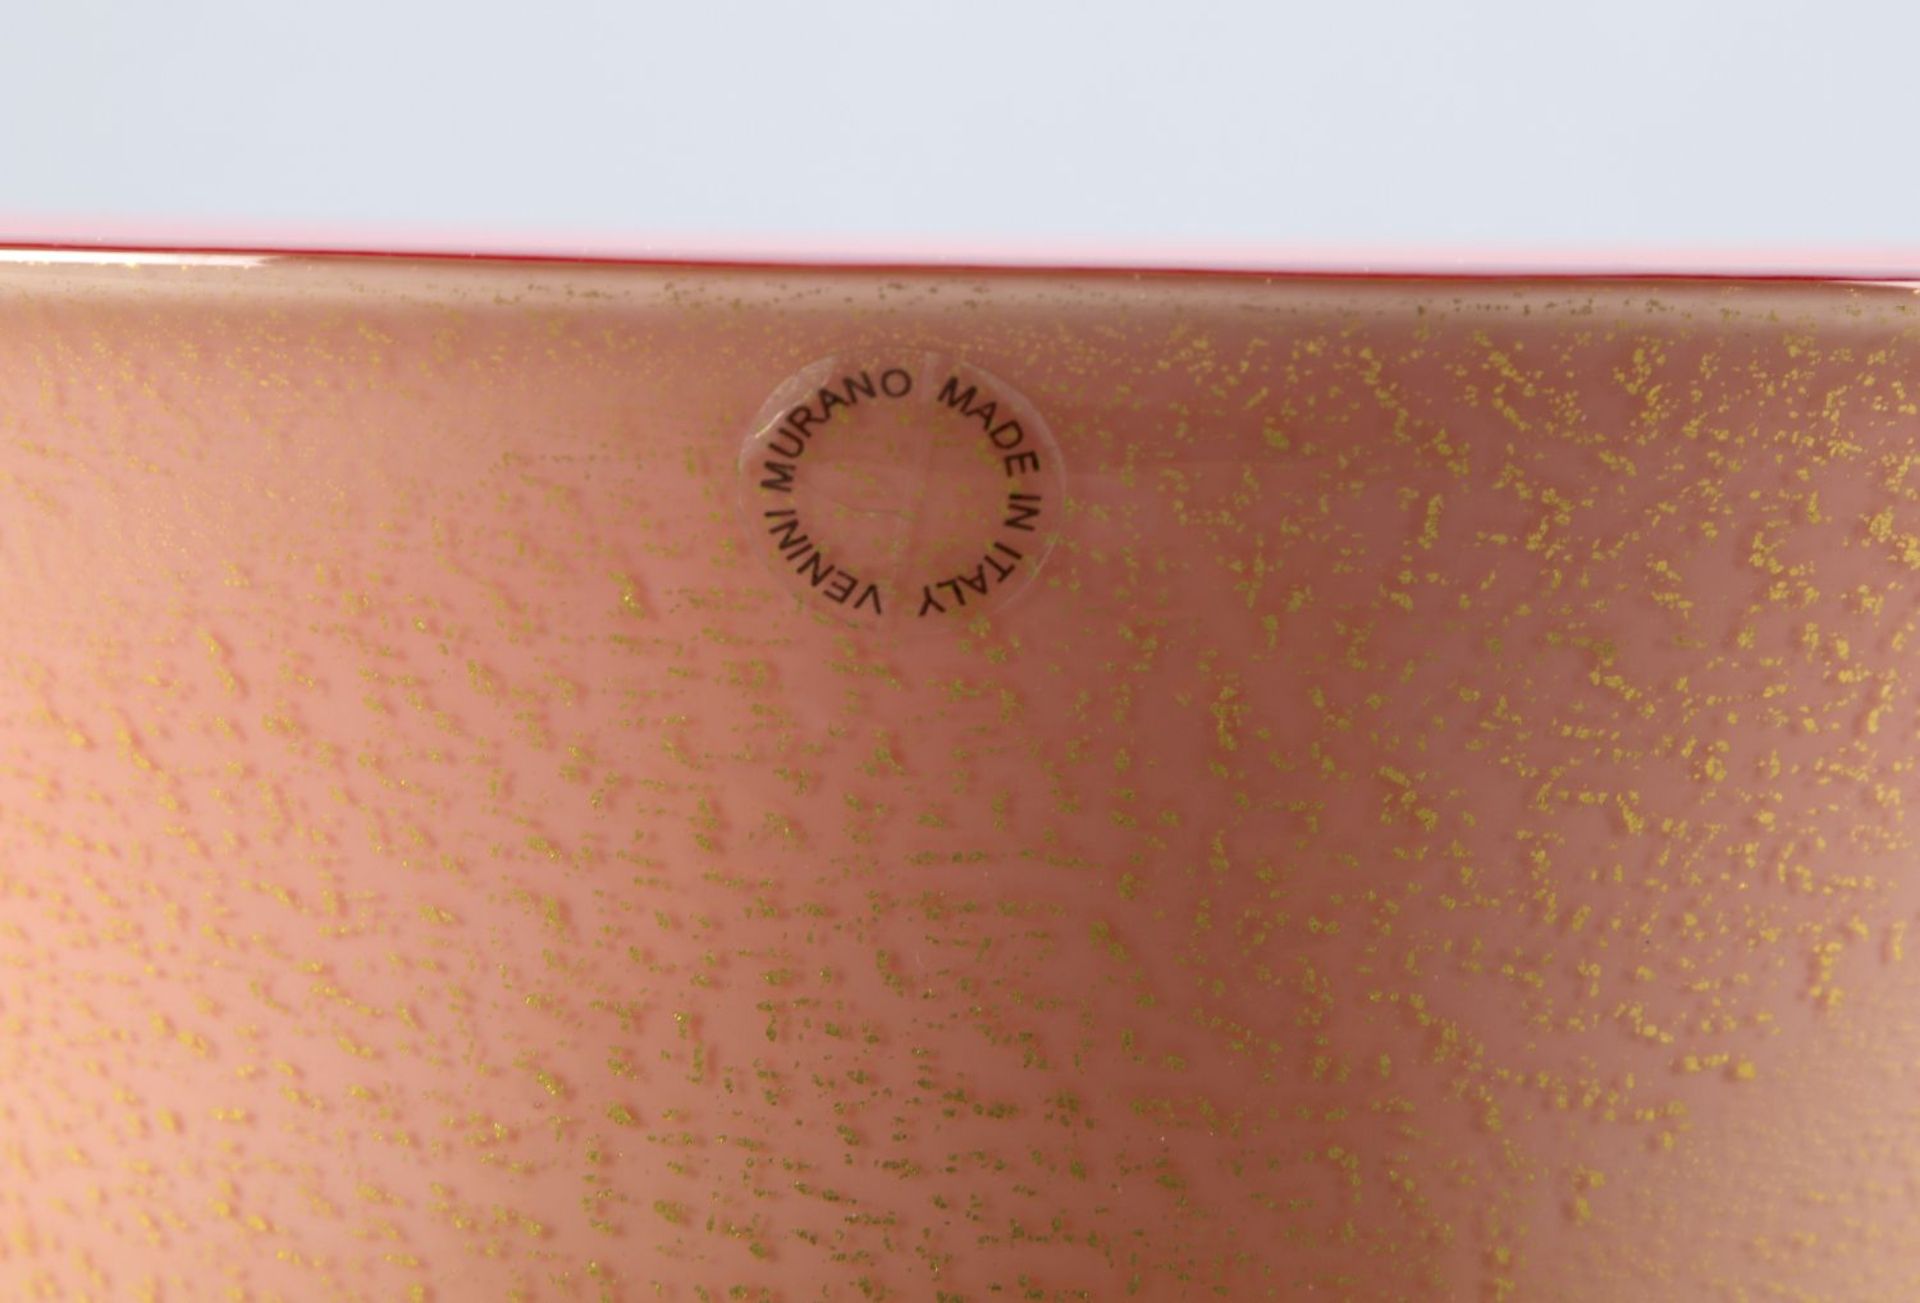 Murano-VaseFarbloses Glas, rosa unterfangen, gesprengte Goldfolie. Im Boden bez. "venini 97". H. - Image 3 of 3